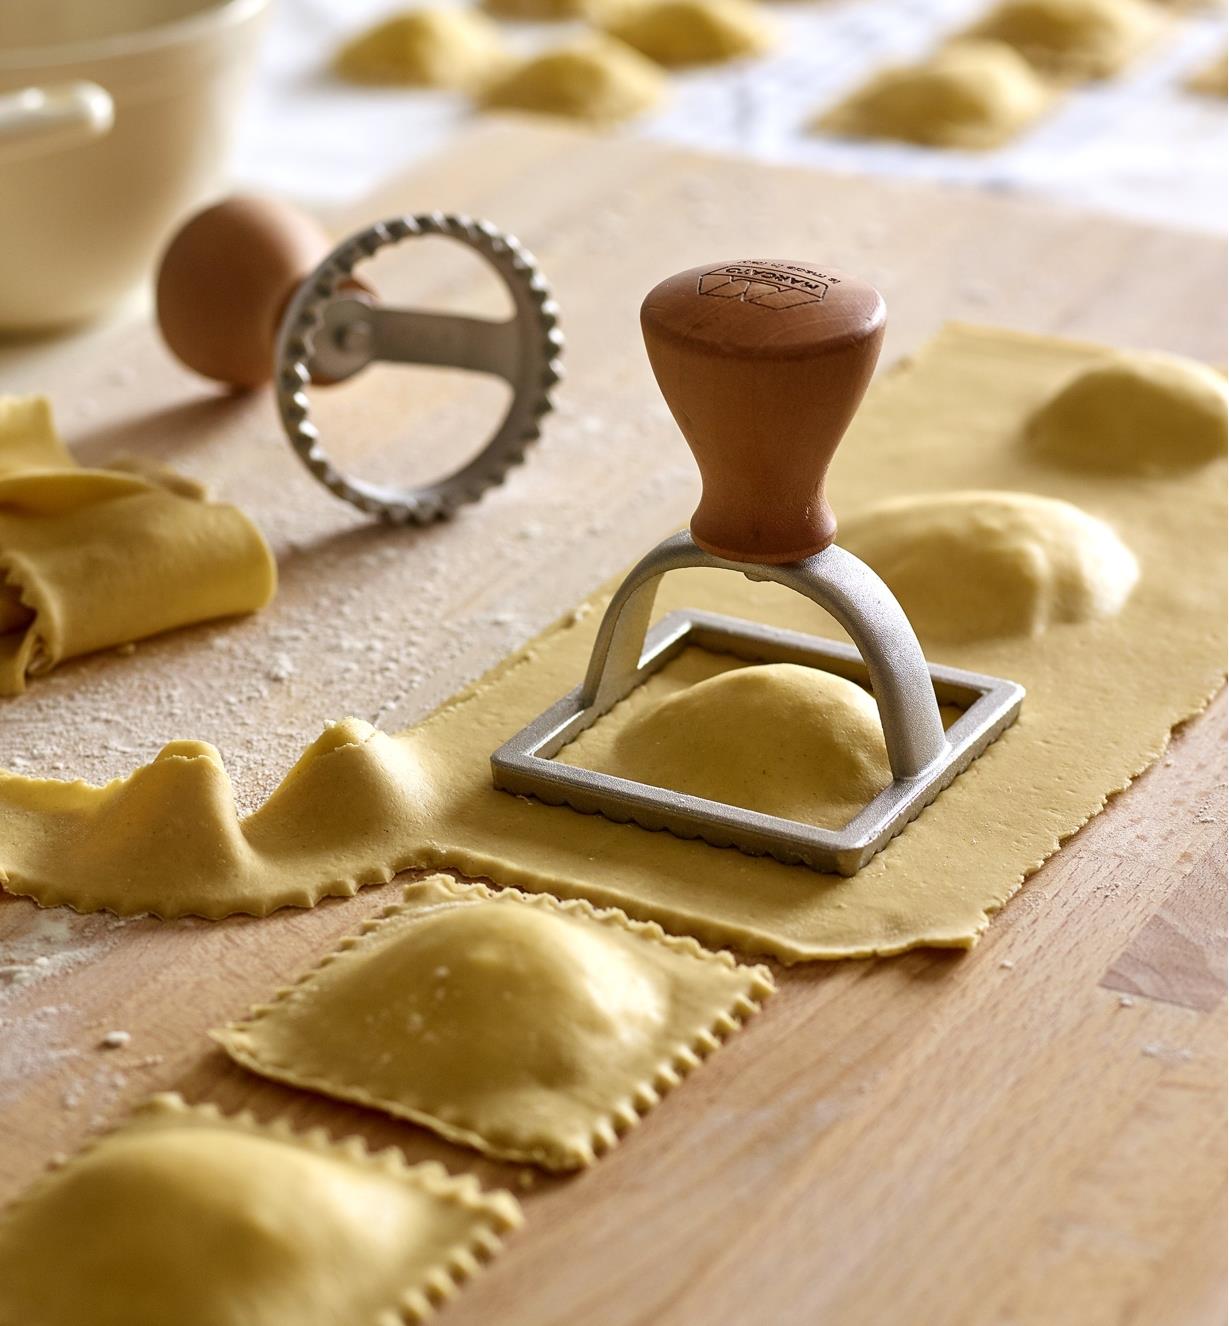 Square ravioli stamp set up to cut out square-shaped ravioli